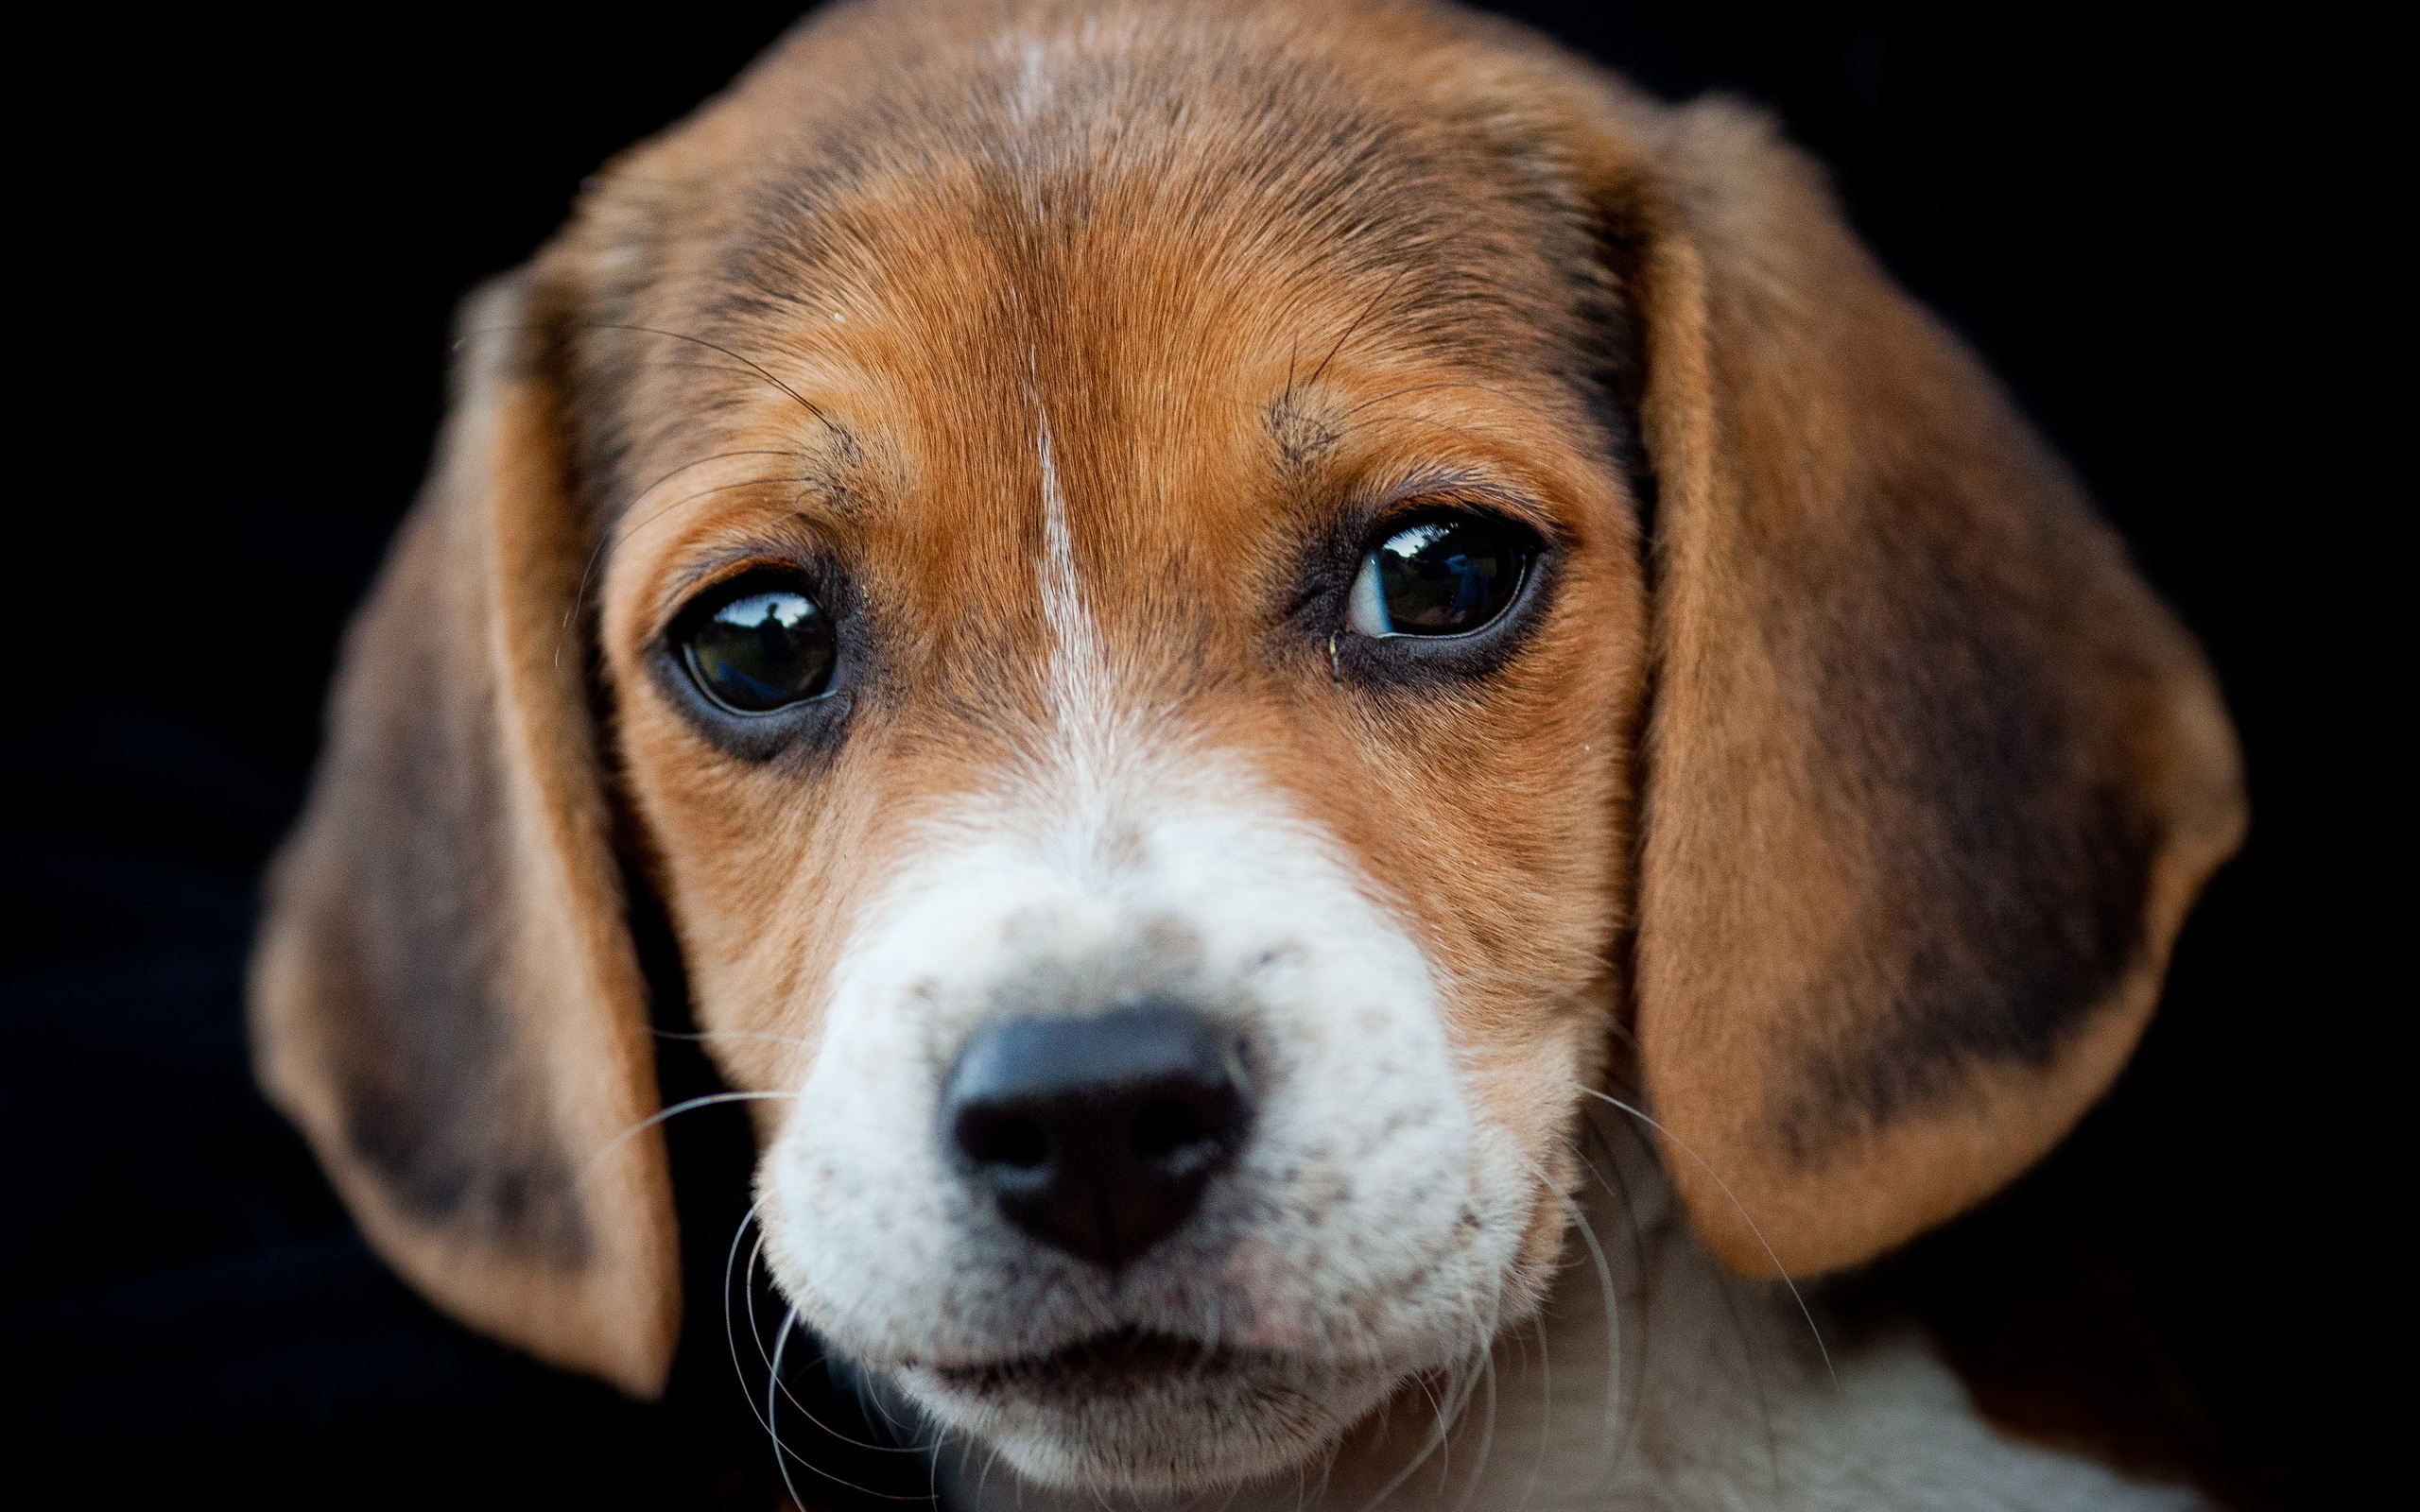 puppy beagle